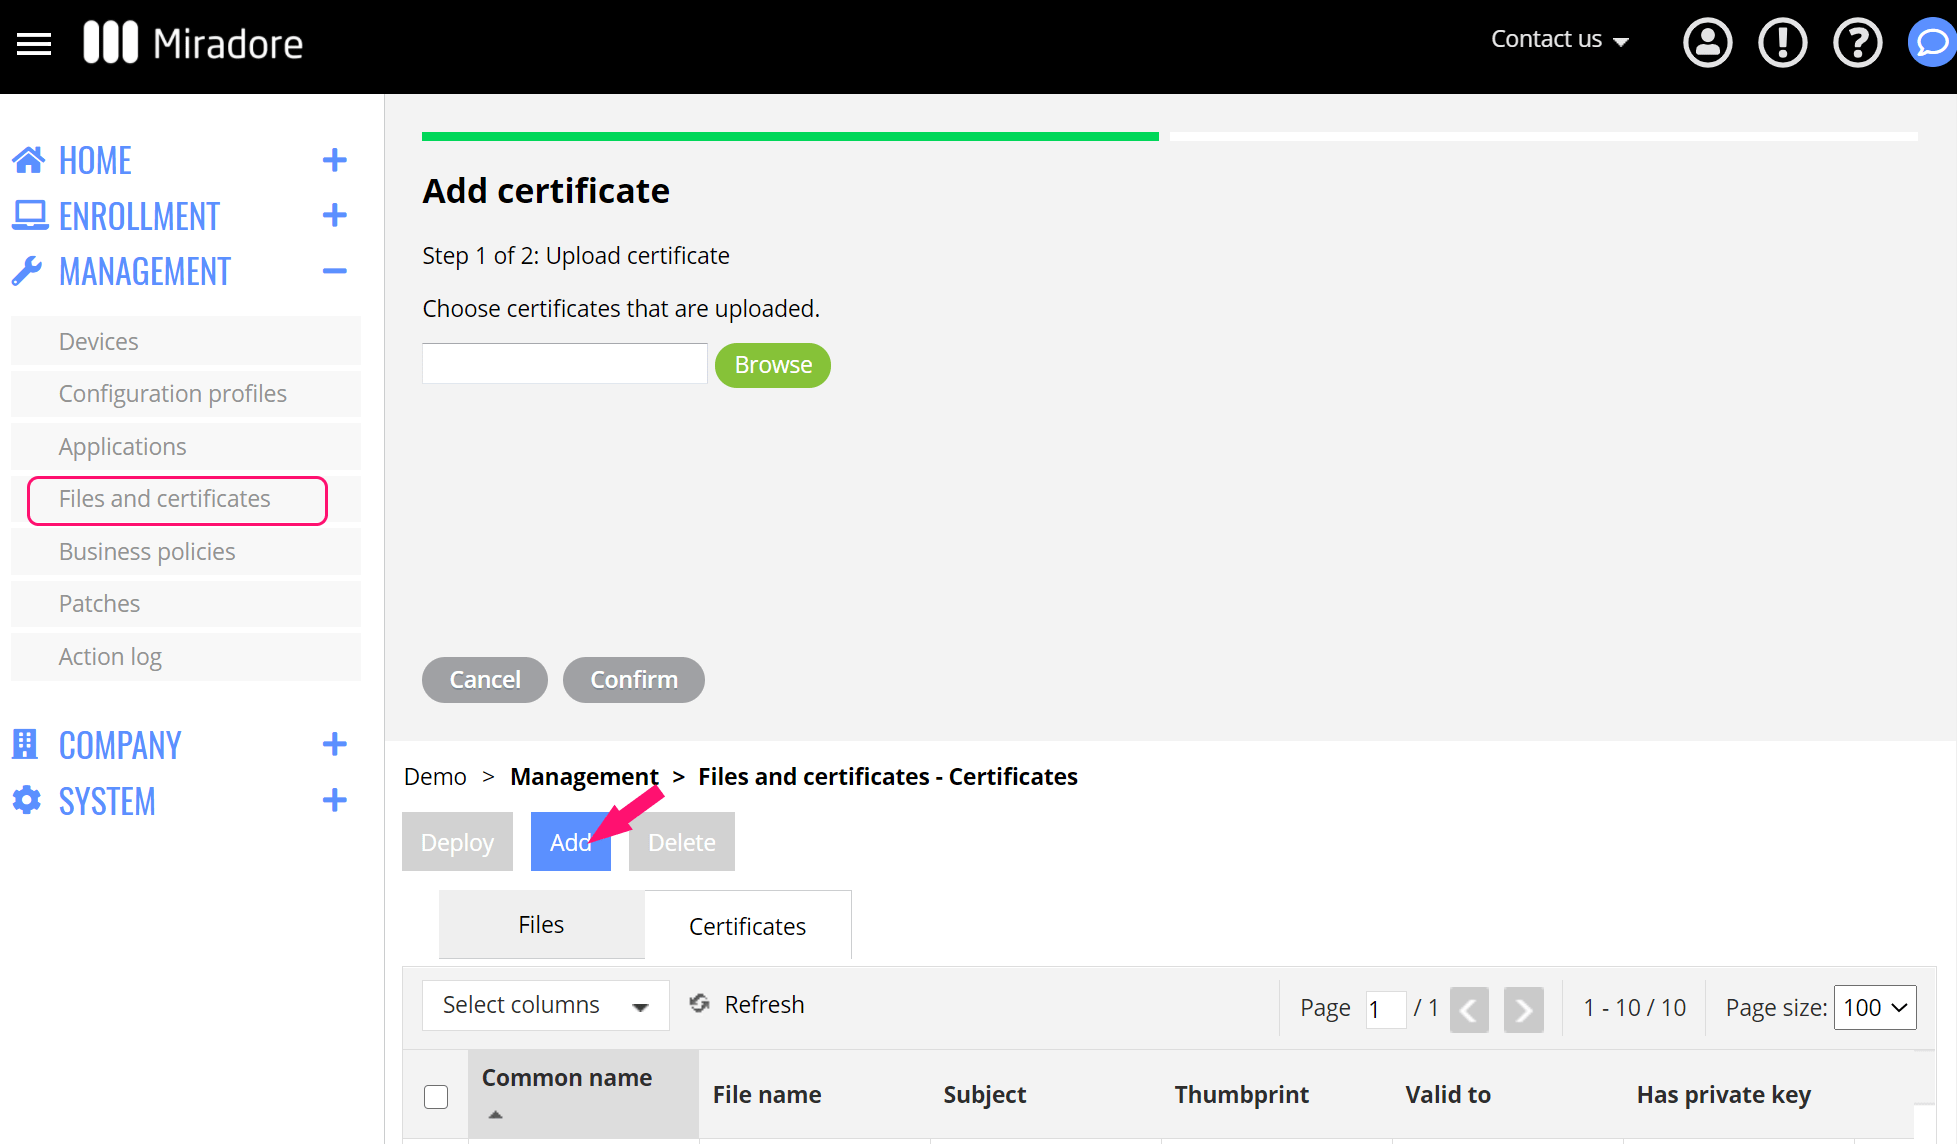 Upload Certificate to Miradore